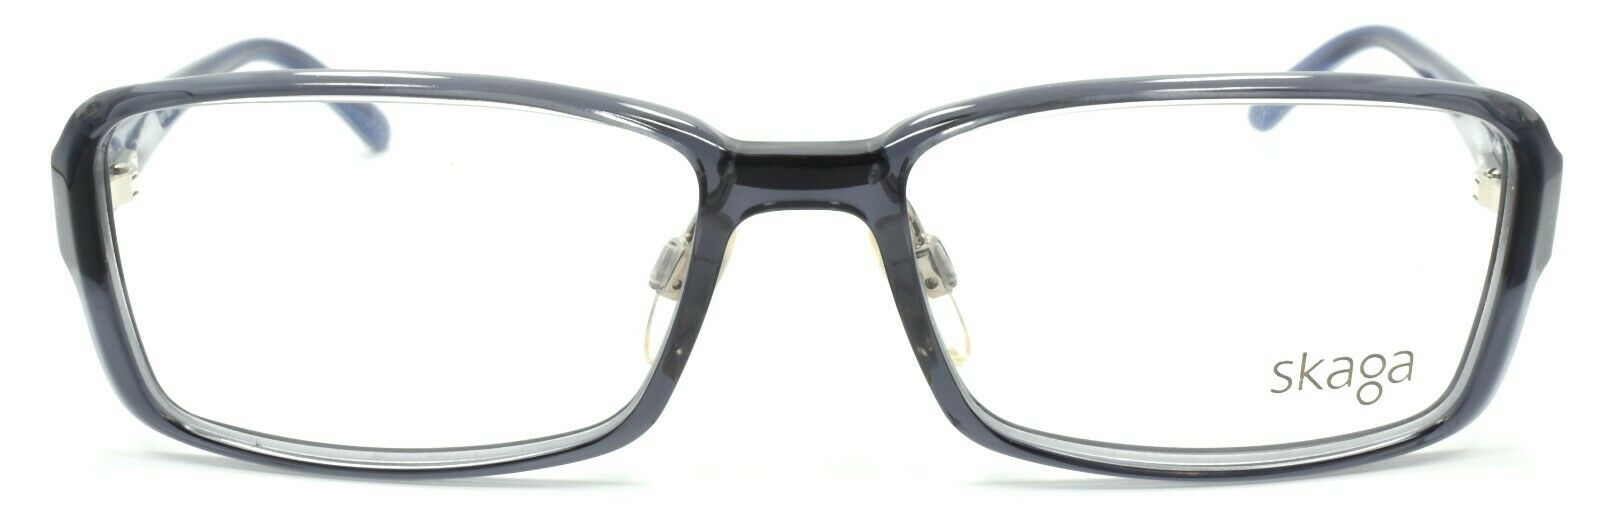 2-Skaga 2442 Pamela 9107 Women's Eyeglasses Frames 53-16-130 Crystal Blue Grey-IKSpecs